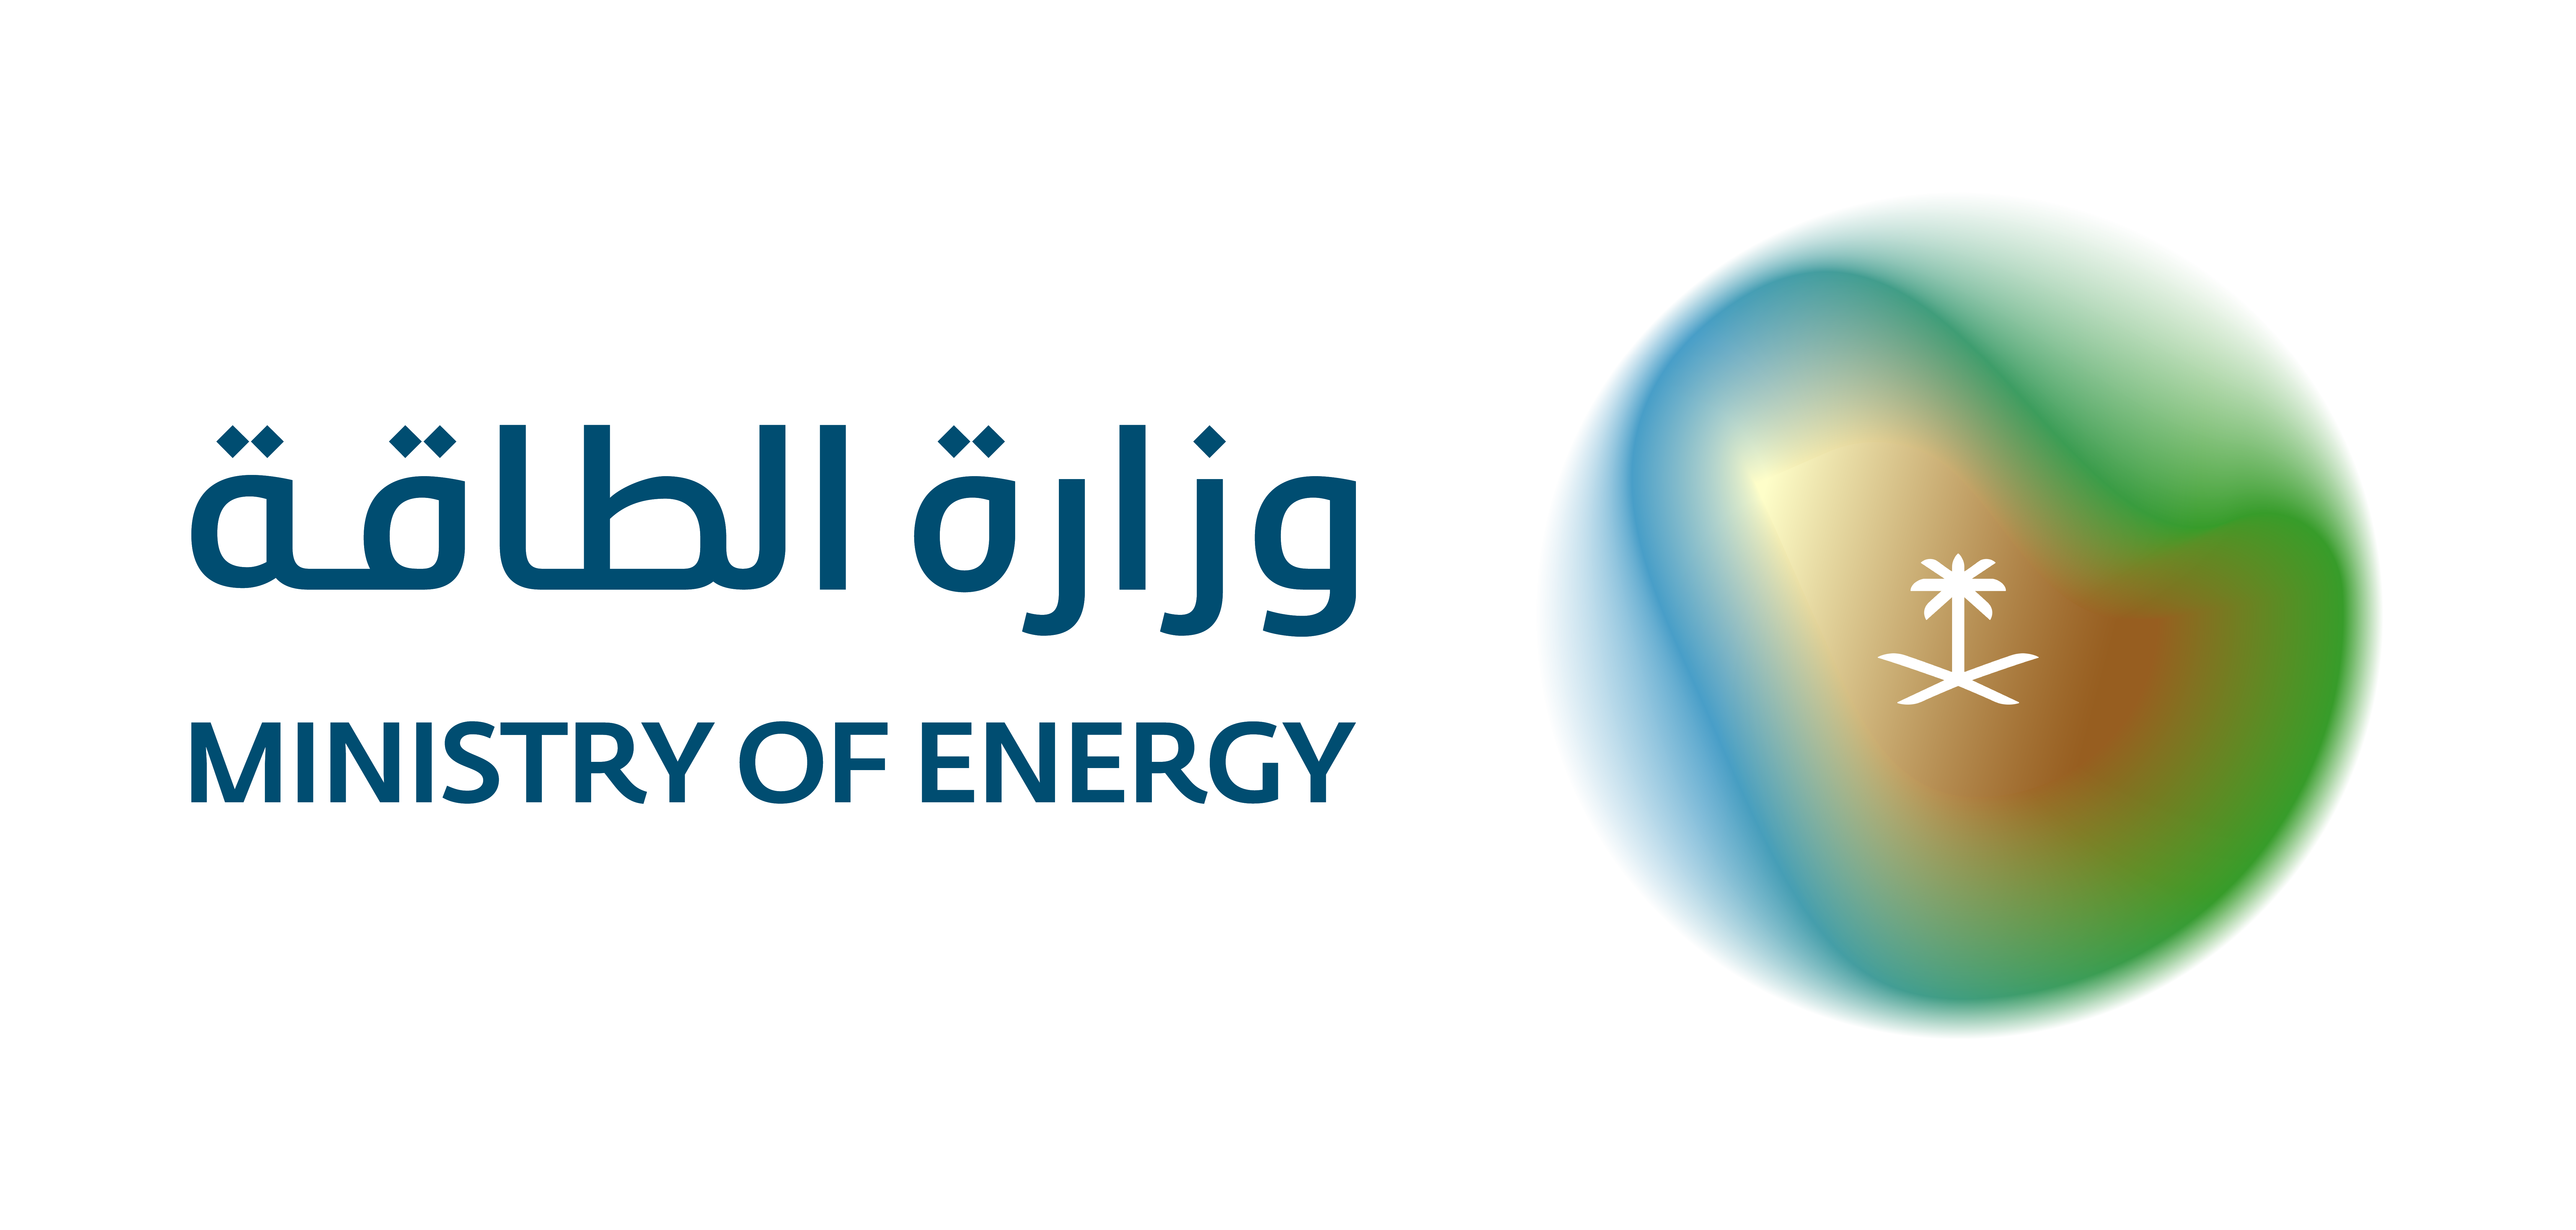 Ministry of Energy, Saudi Arabia